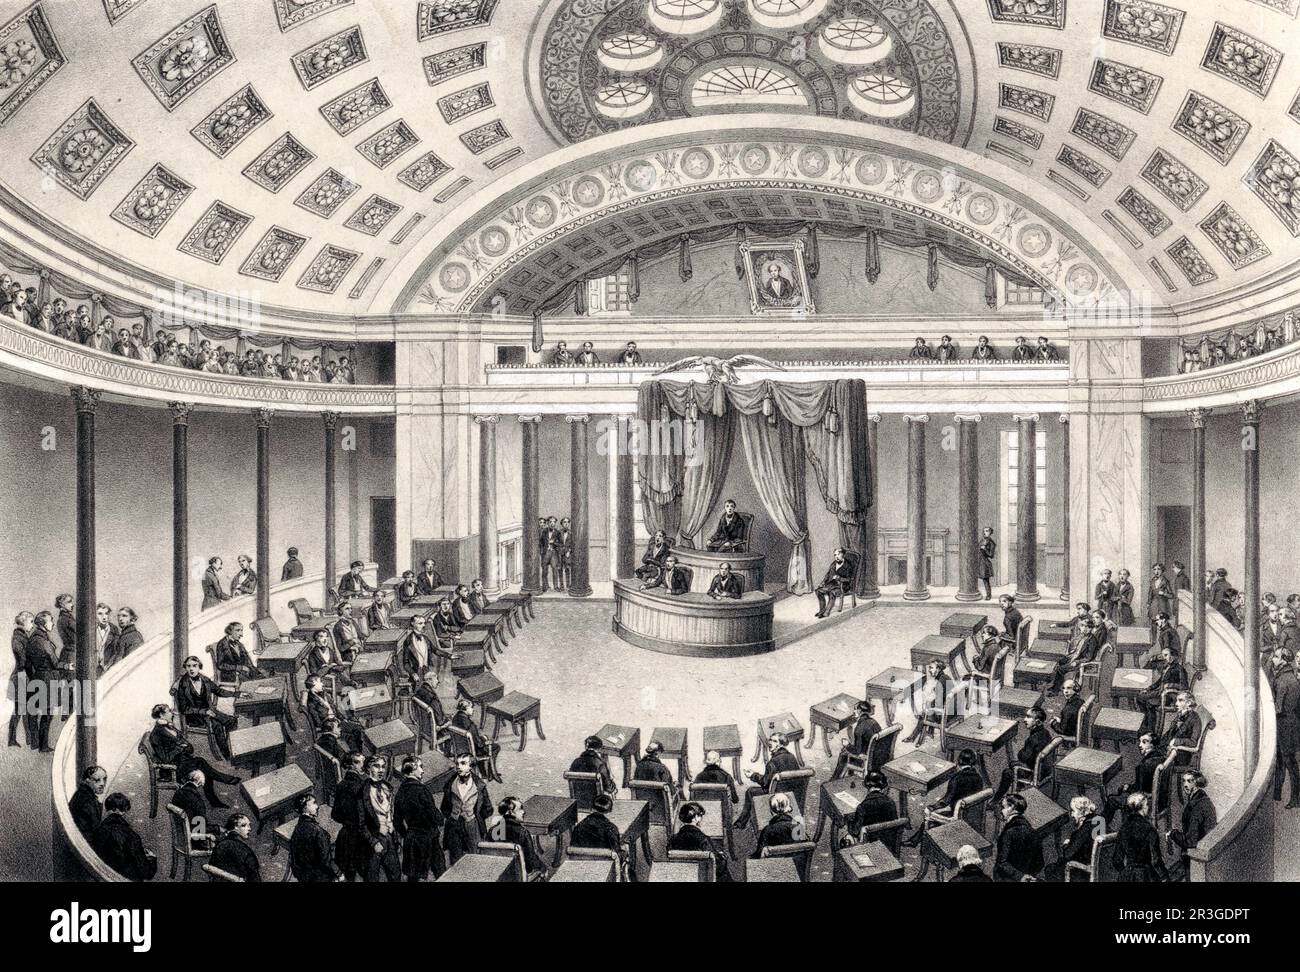 Cámara del Senado, Washington D.C., hacia 1850. Foto de stock